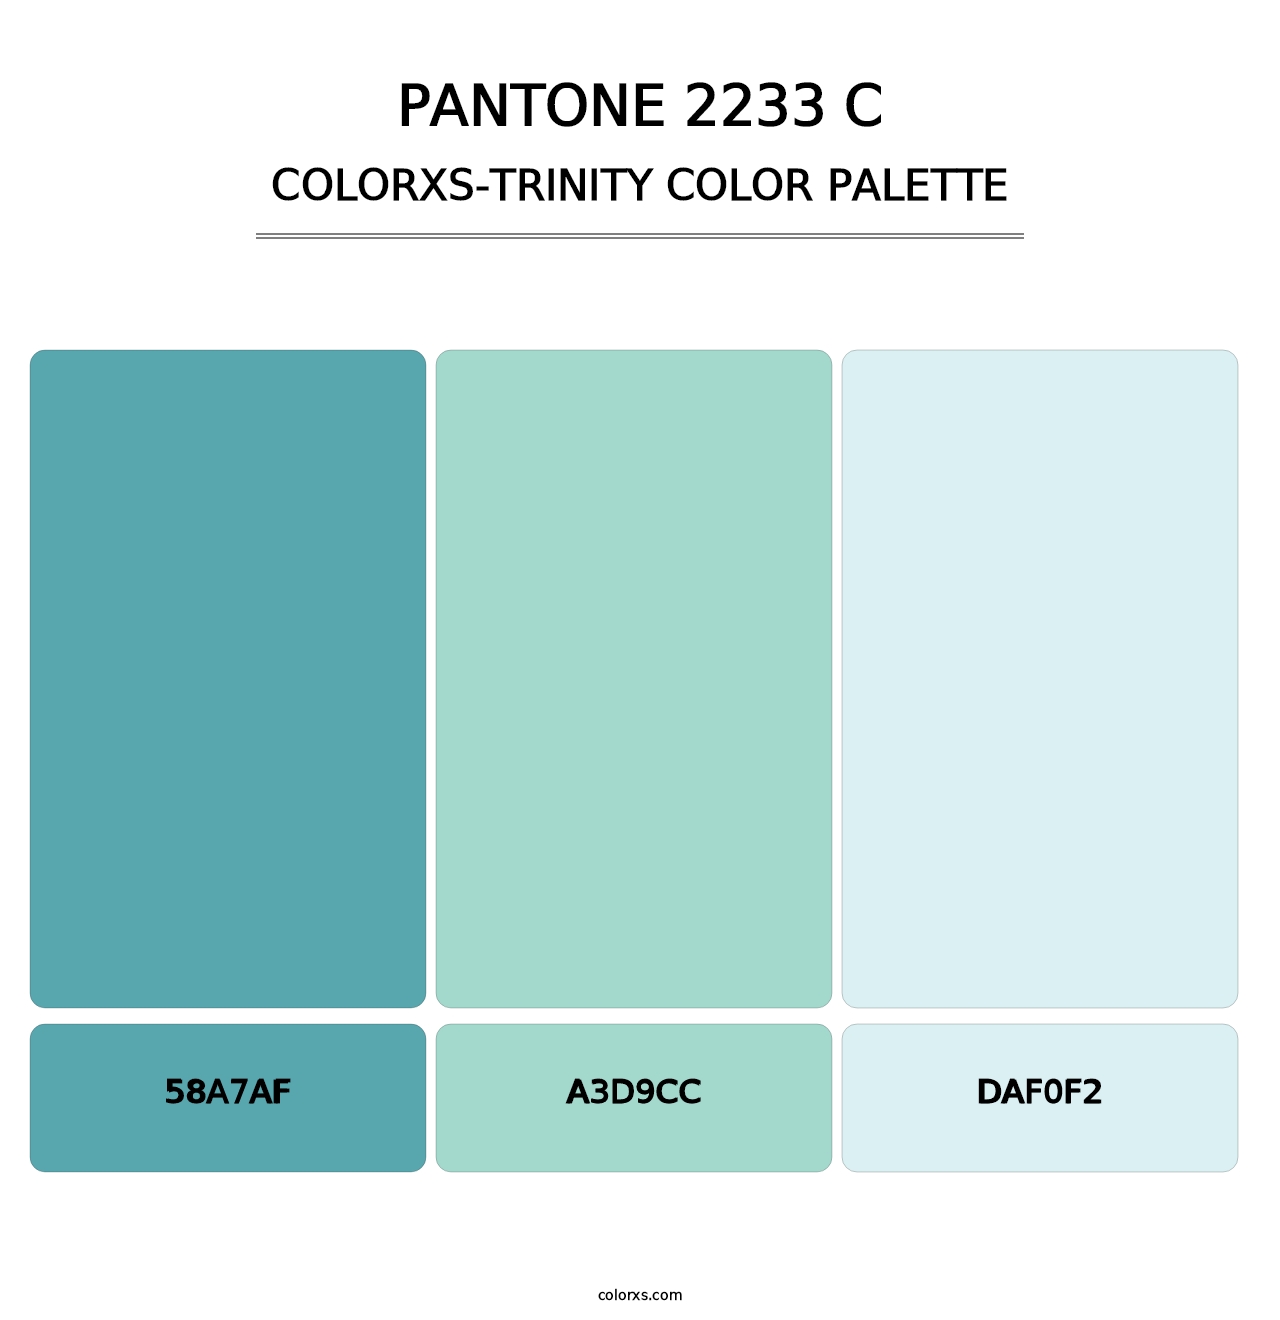 PANTONE 2233 C - Colorxs Trinity Palette